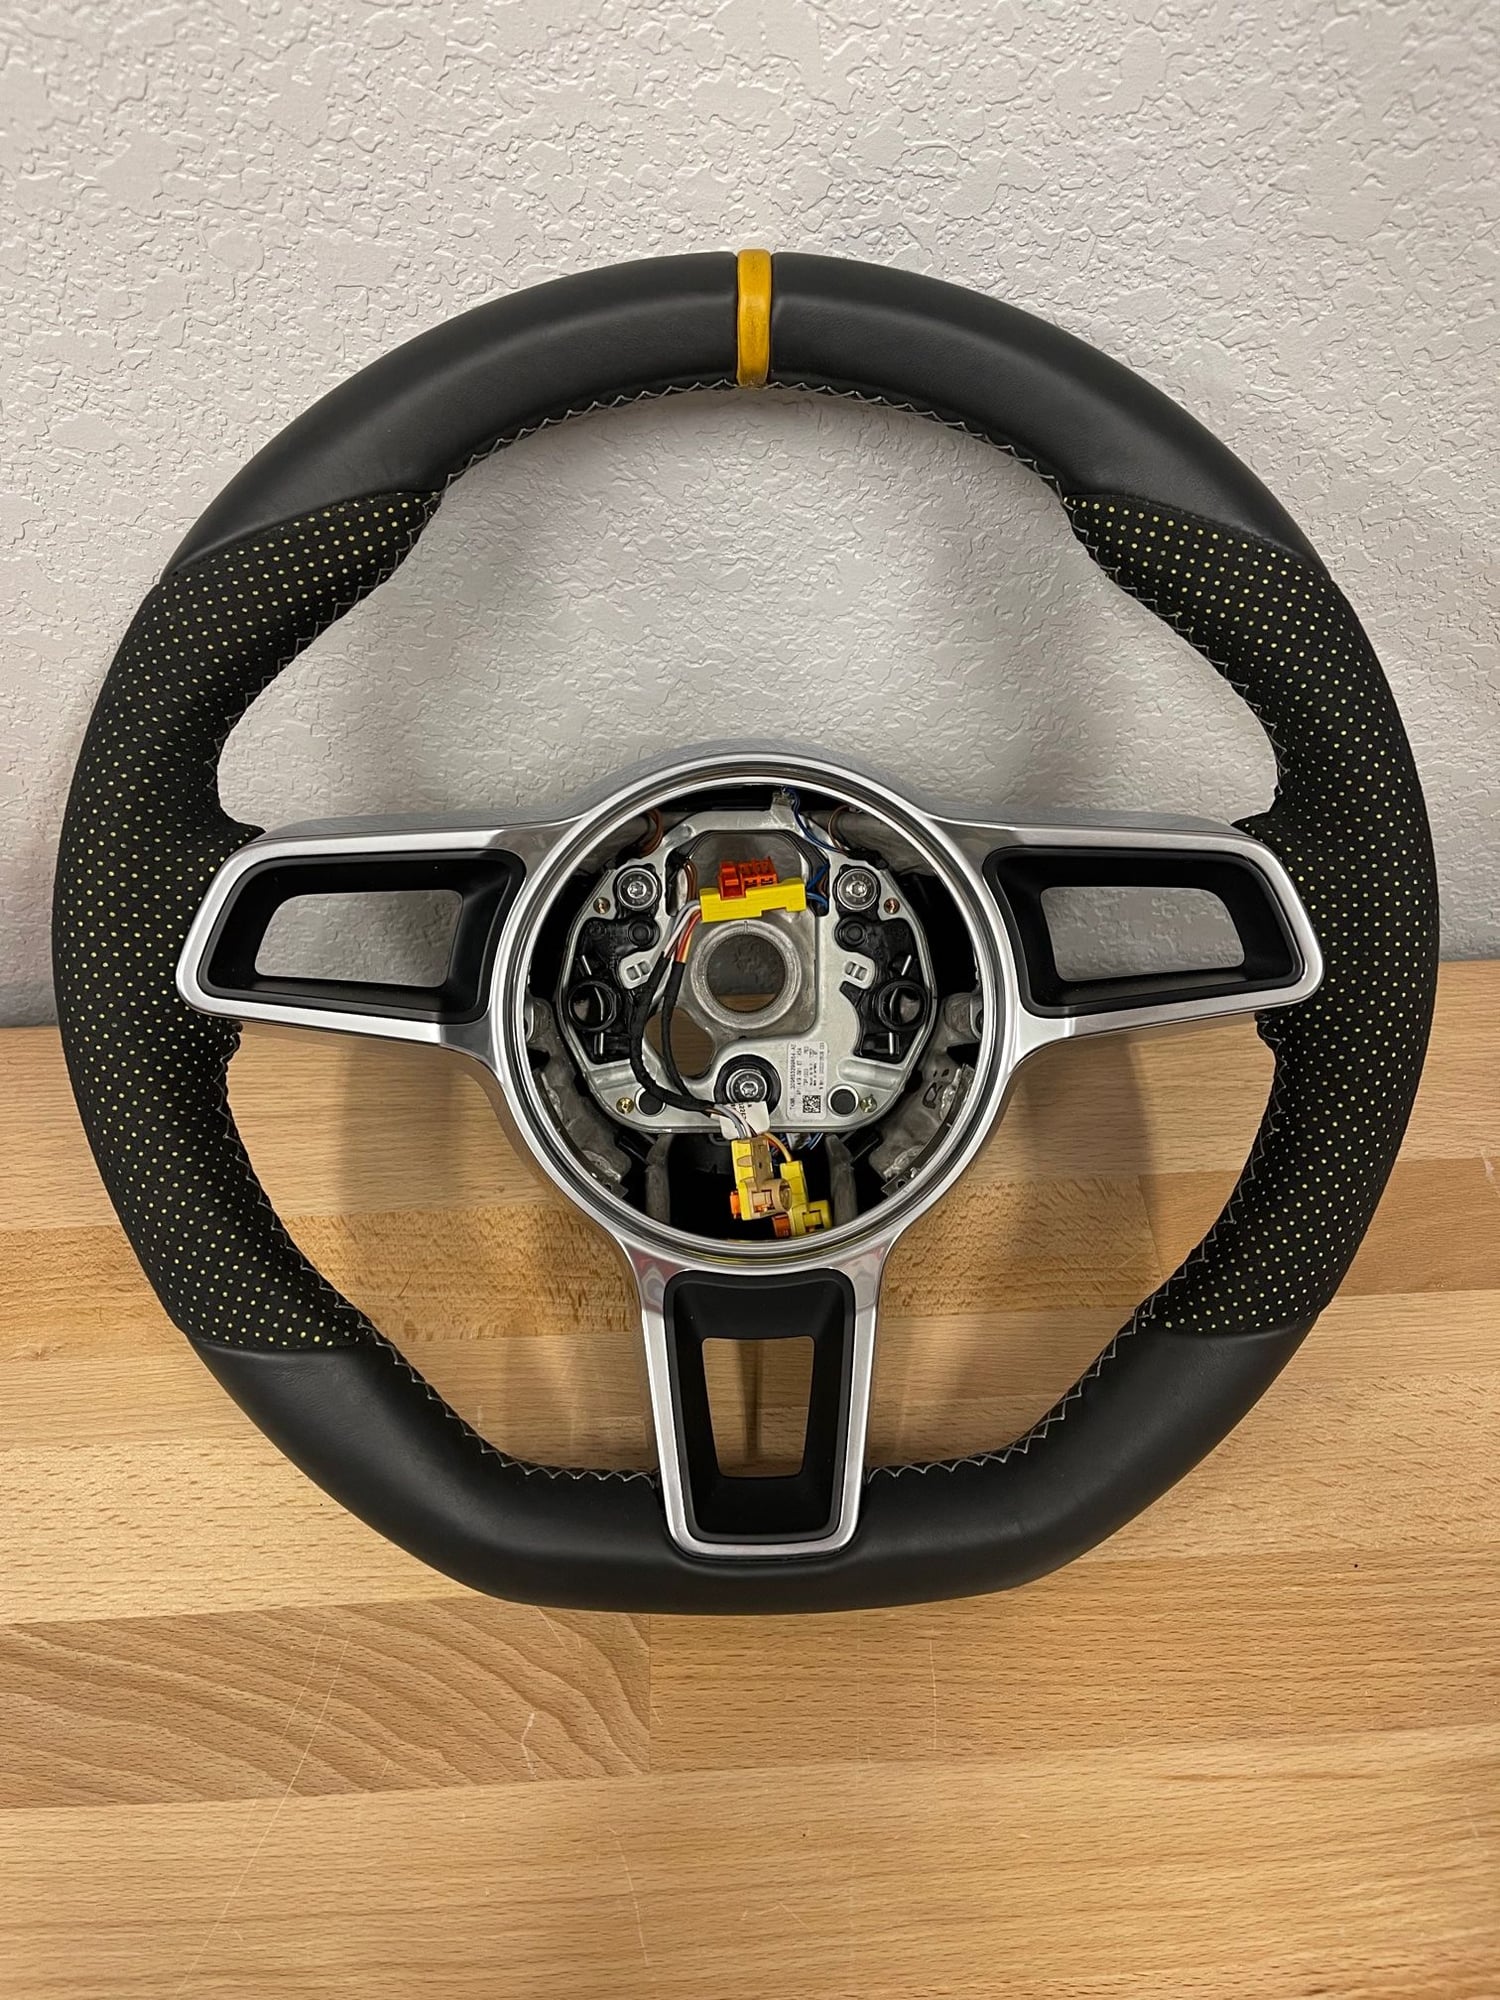 Exterior Body Parts - TechArt Steering wheel & TechArt Carbon Fiber mirror caps for 981 - Used - 2016 Porsche Cayman - Denver, CO 80221, United States